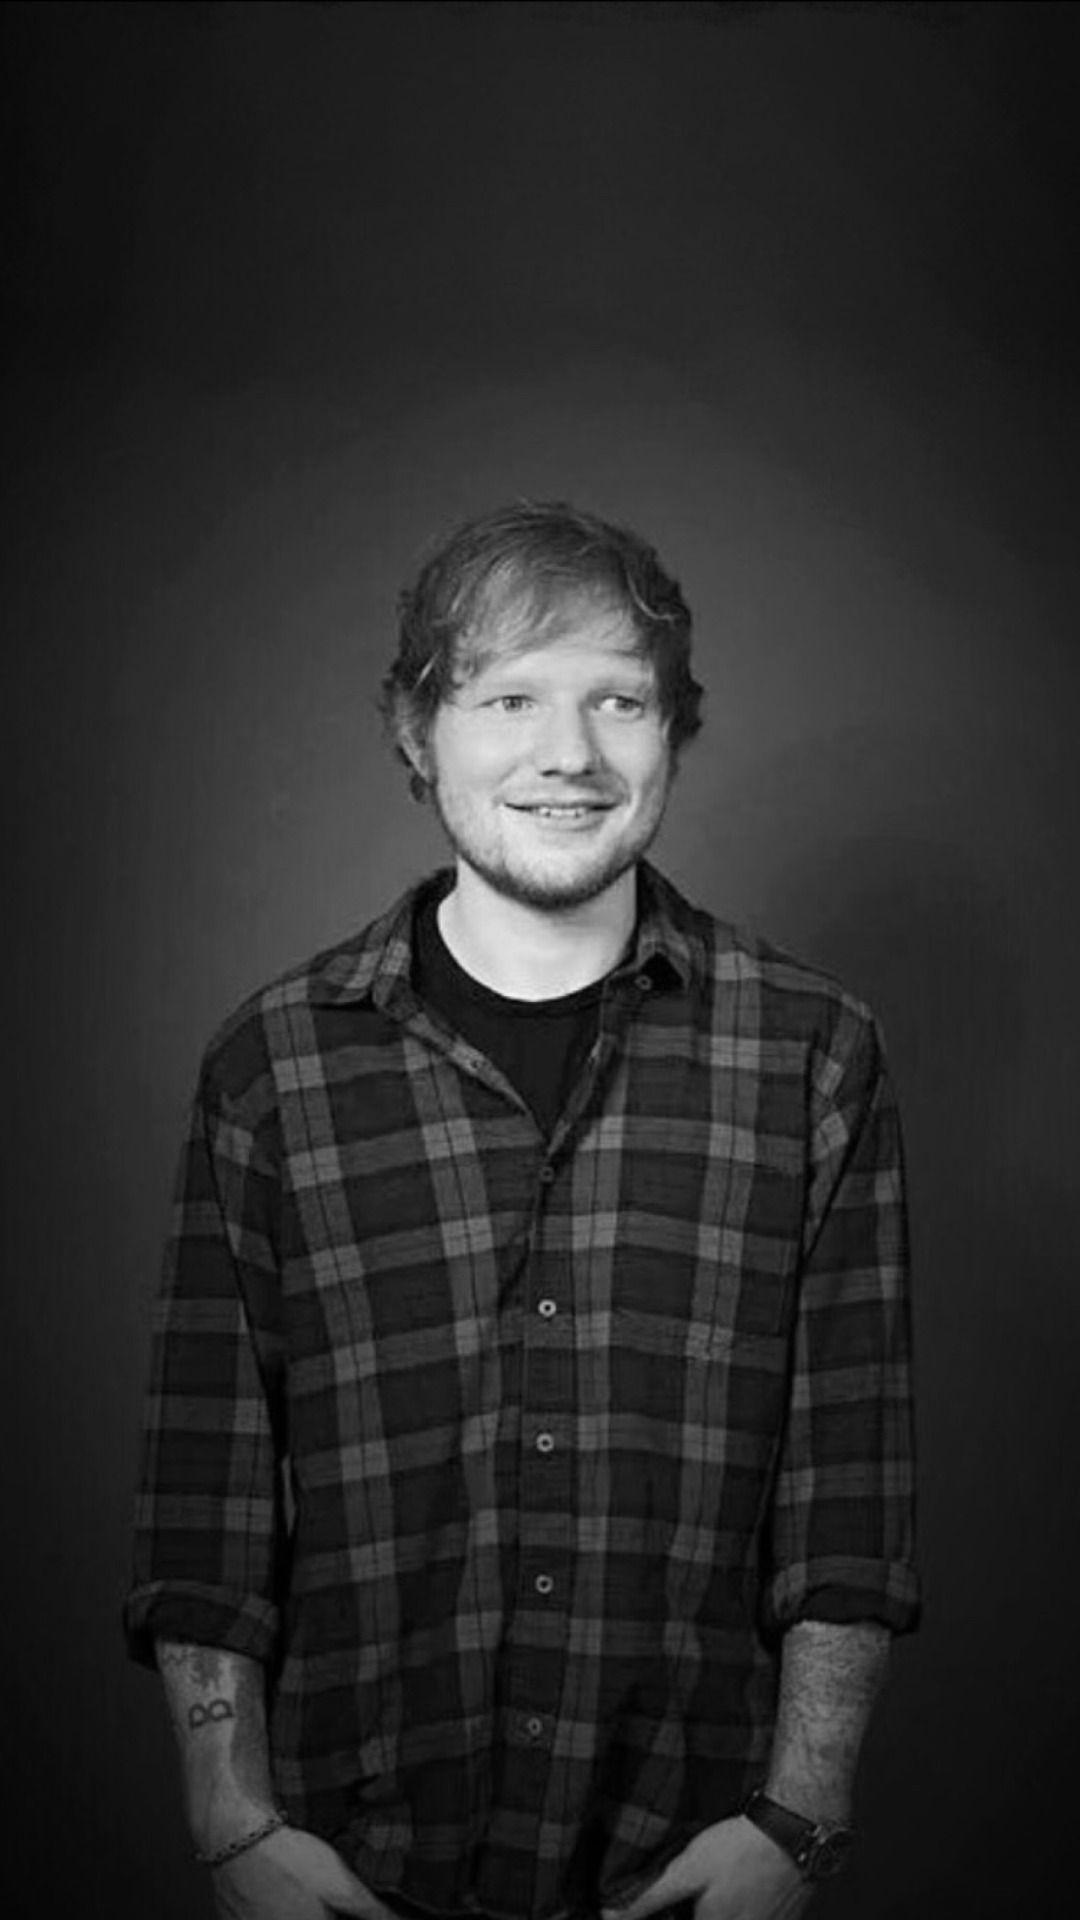 Ed Sheeran Wallpaper Free Ed Sheeran Background